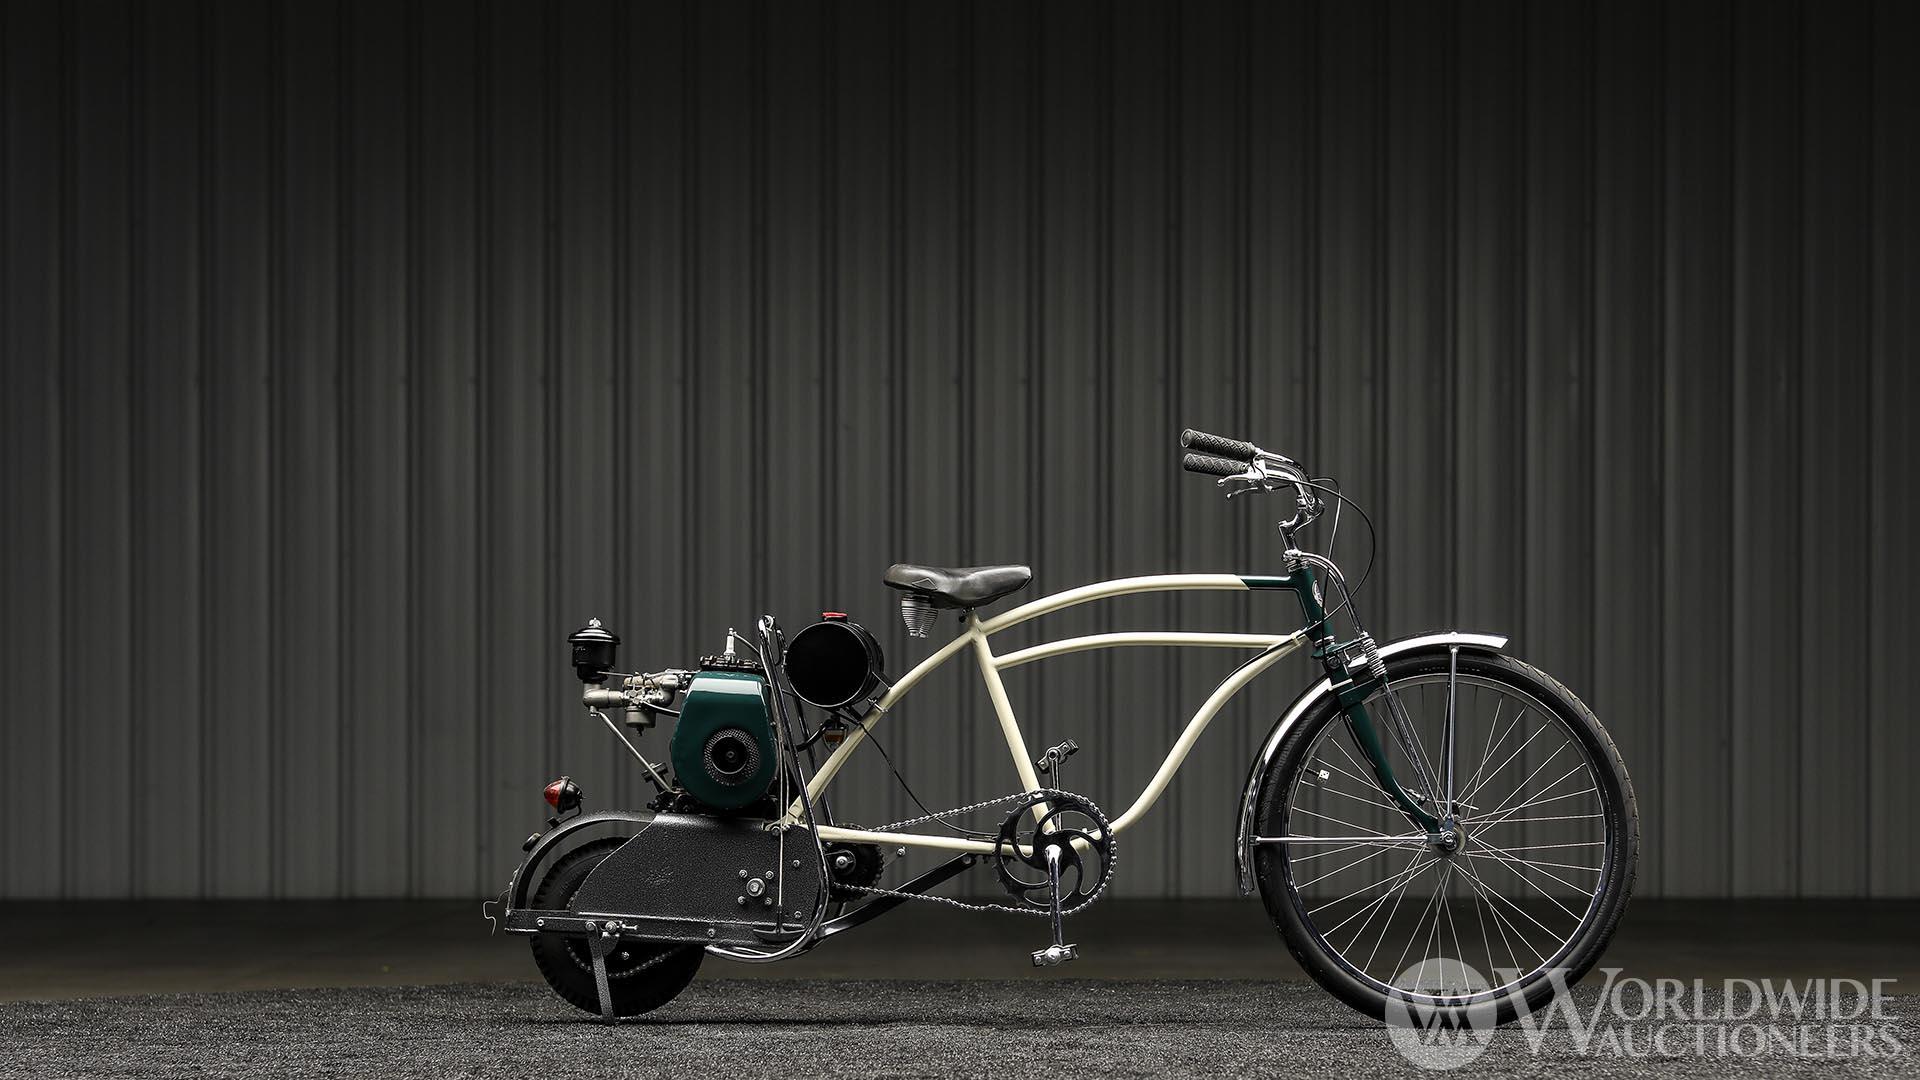 c. 1950s JC Higgins  "Moto-Cycle"